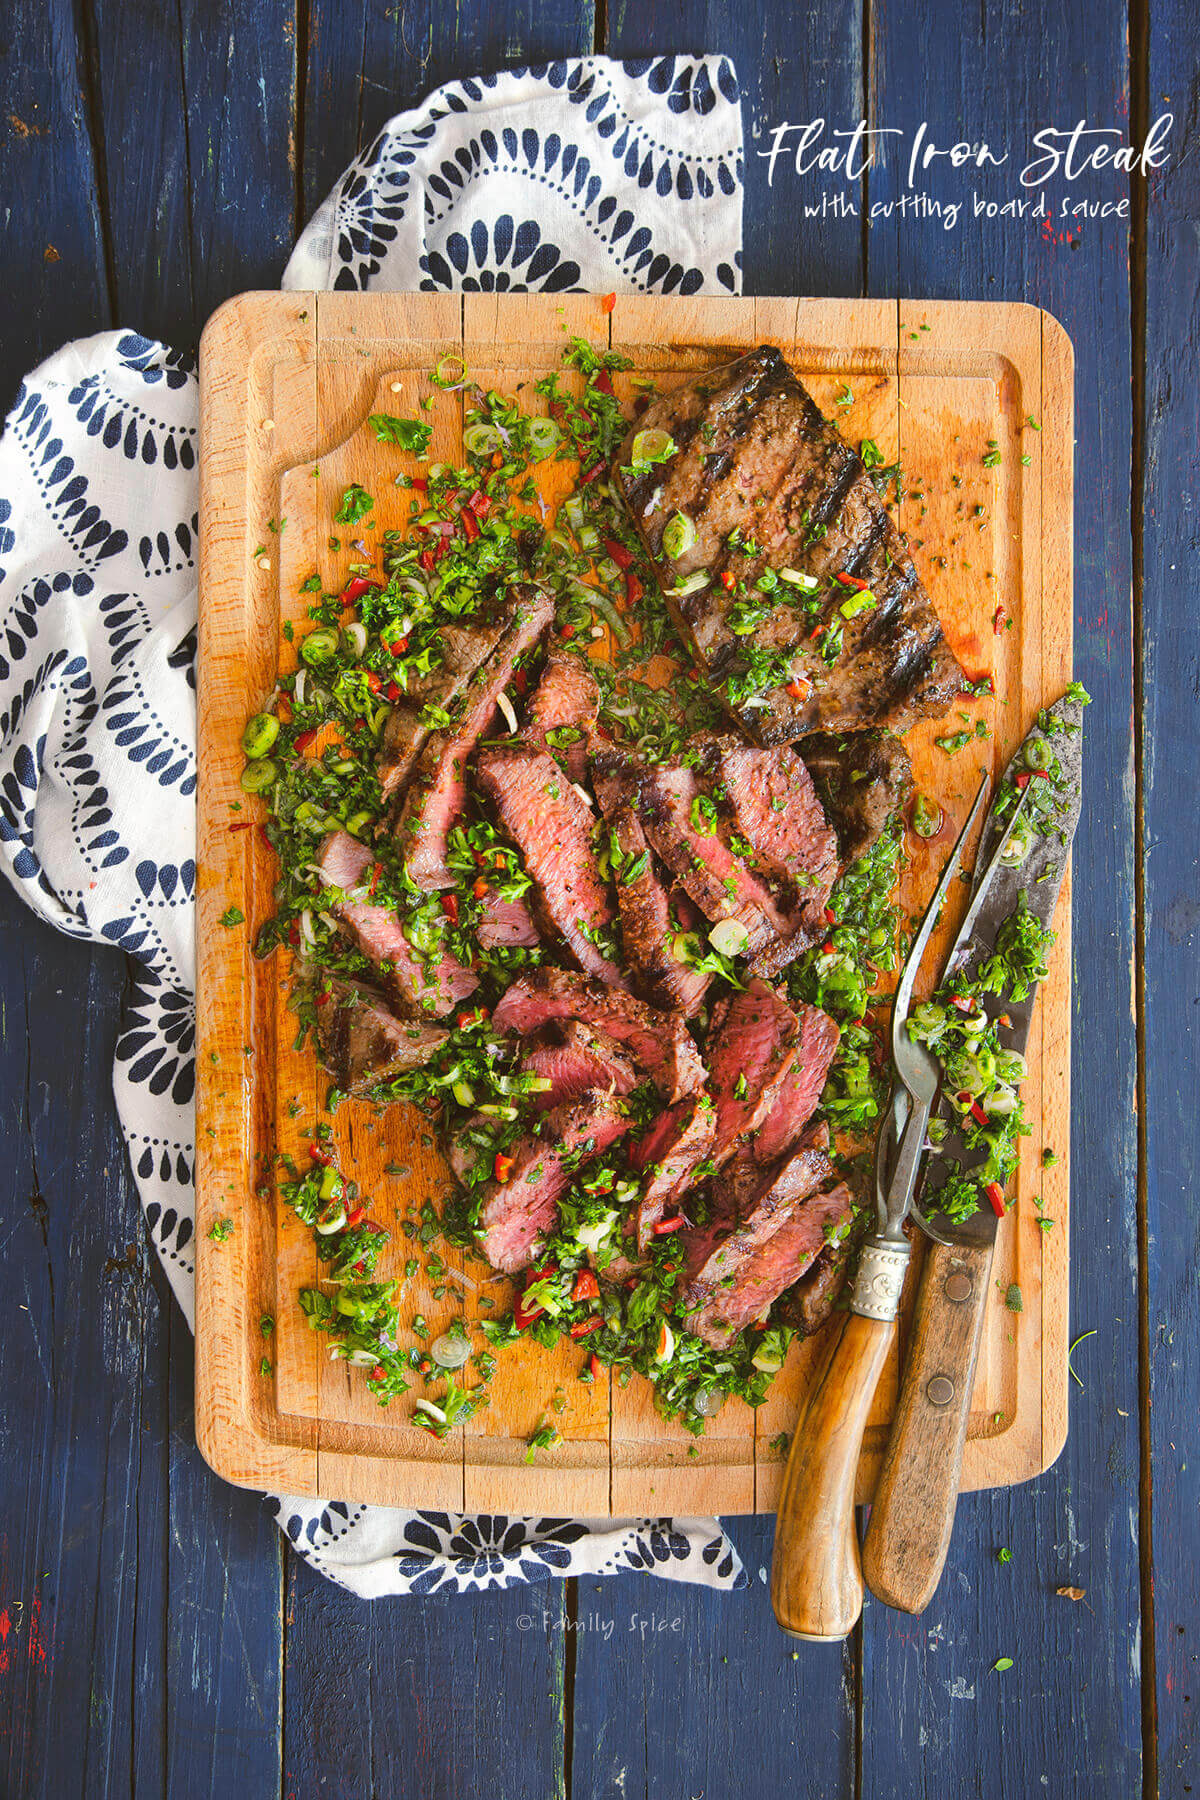 https://familyspice.com/wp-content/uploads/2020/07/flat-iron-steak-cutting-board-sauce3-1200.jpg